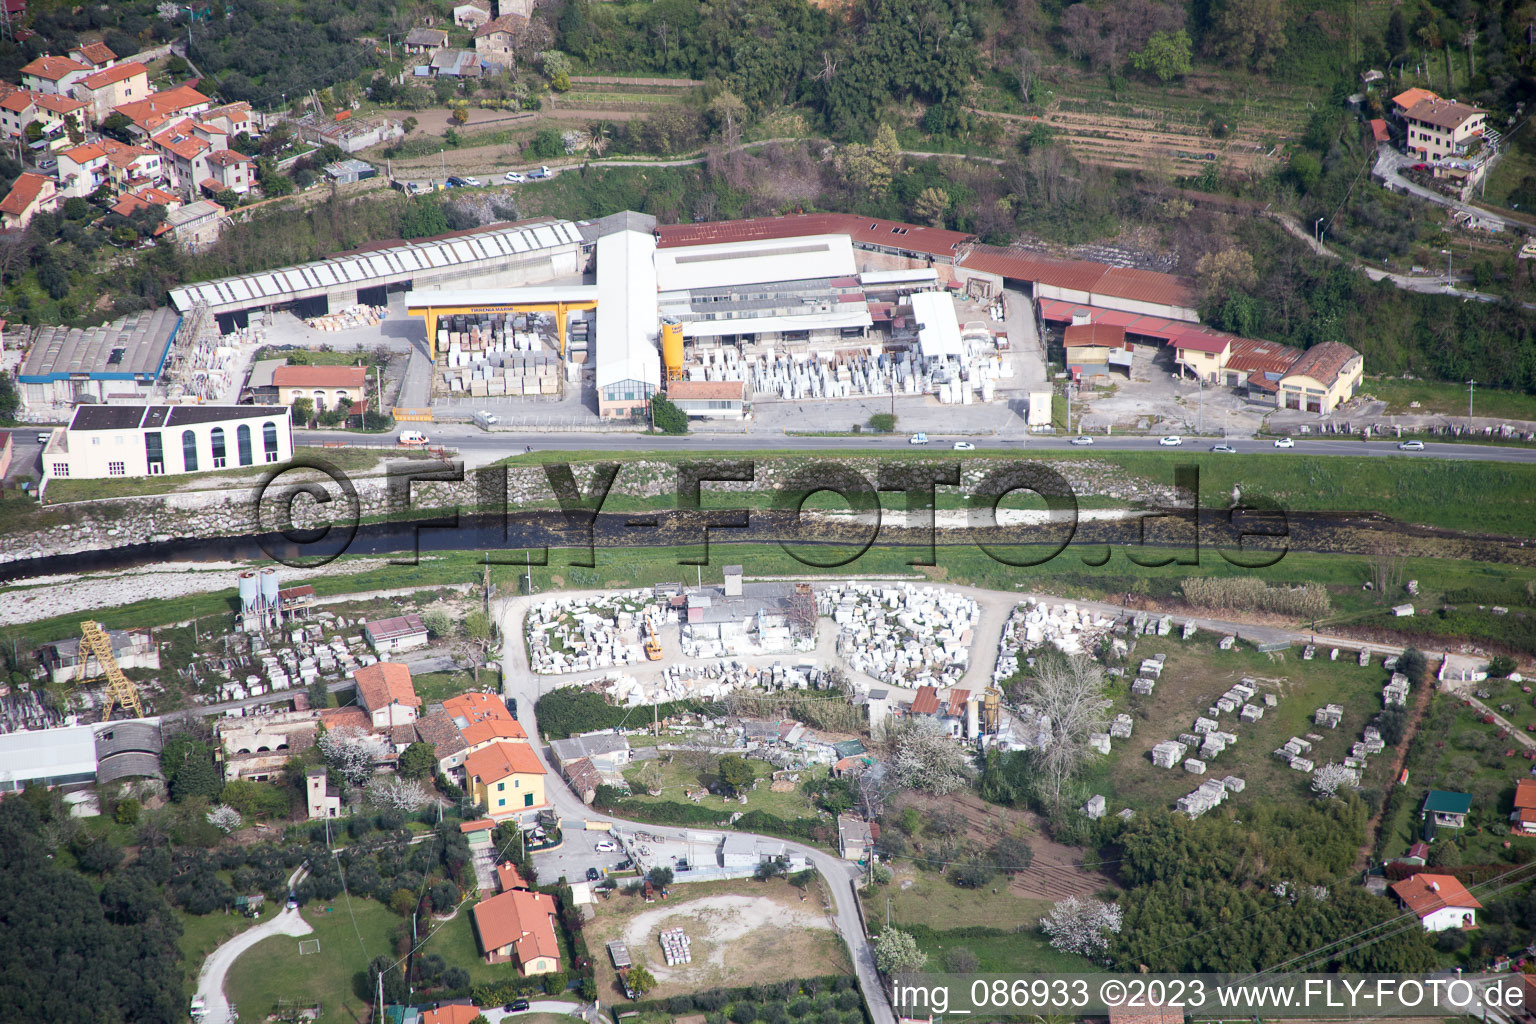 Luftbild von Querceta(I-Toskana) in Ripa-Pozzi-Querceta-Ponterosso im Bundesland Toscana, Italien